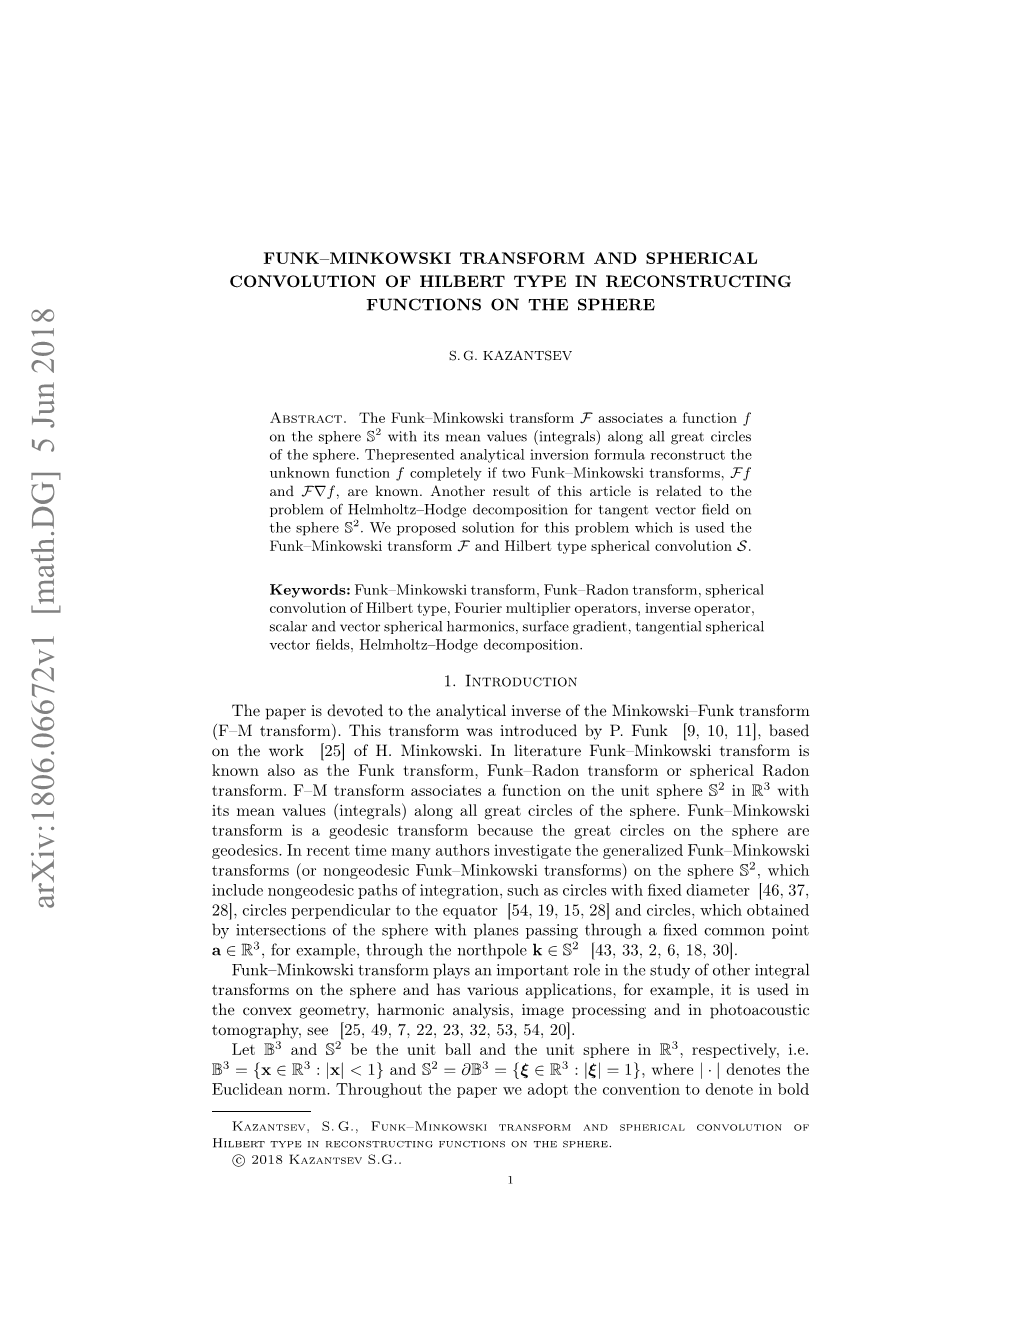 Funk-Minkowski Transform and Spherical Convolution of Hilbert Type